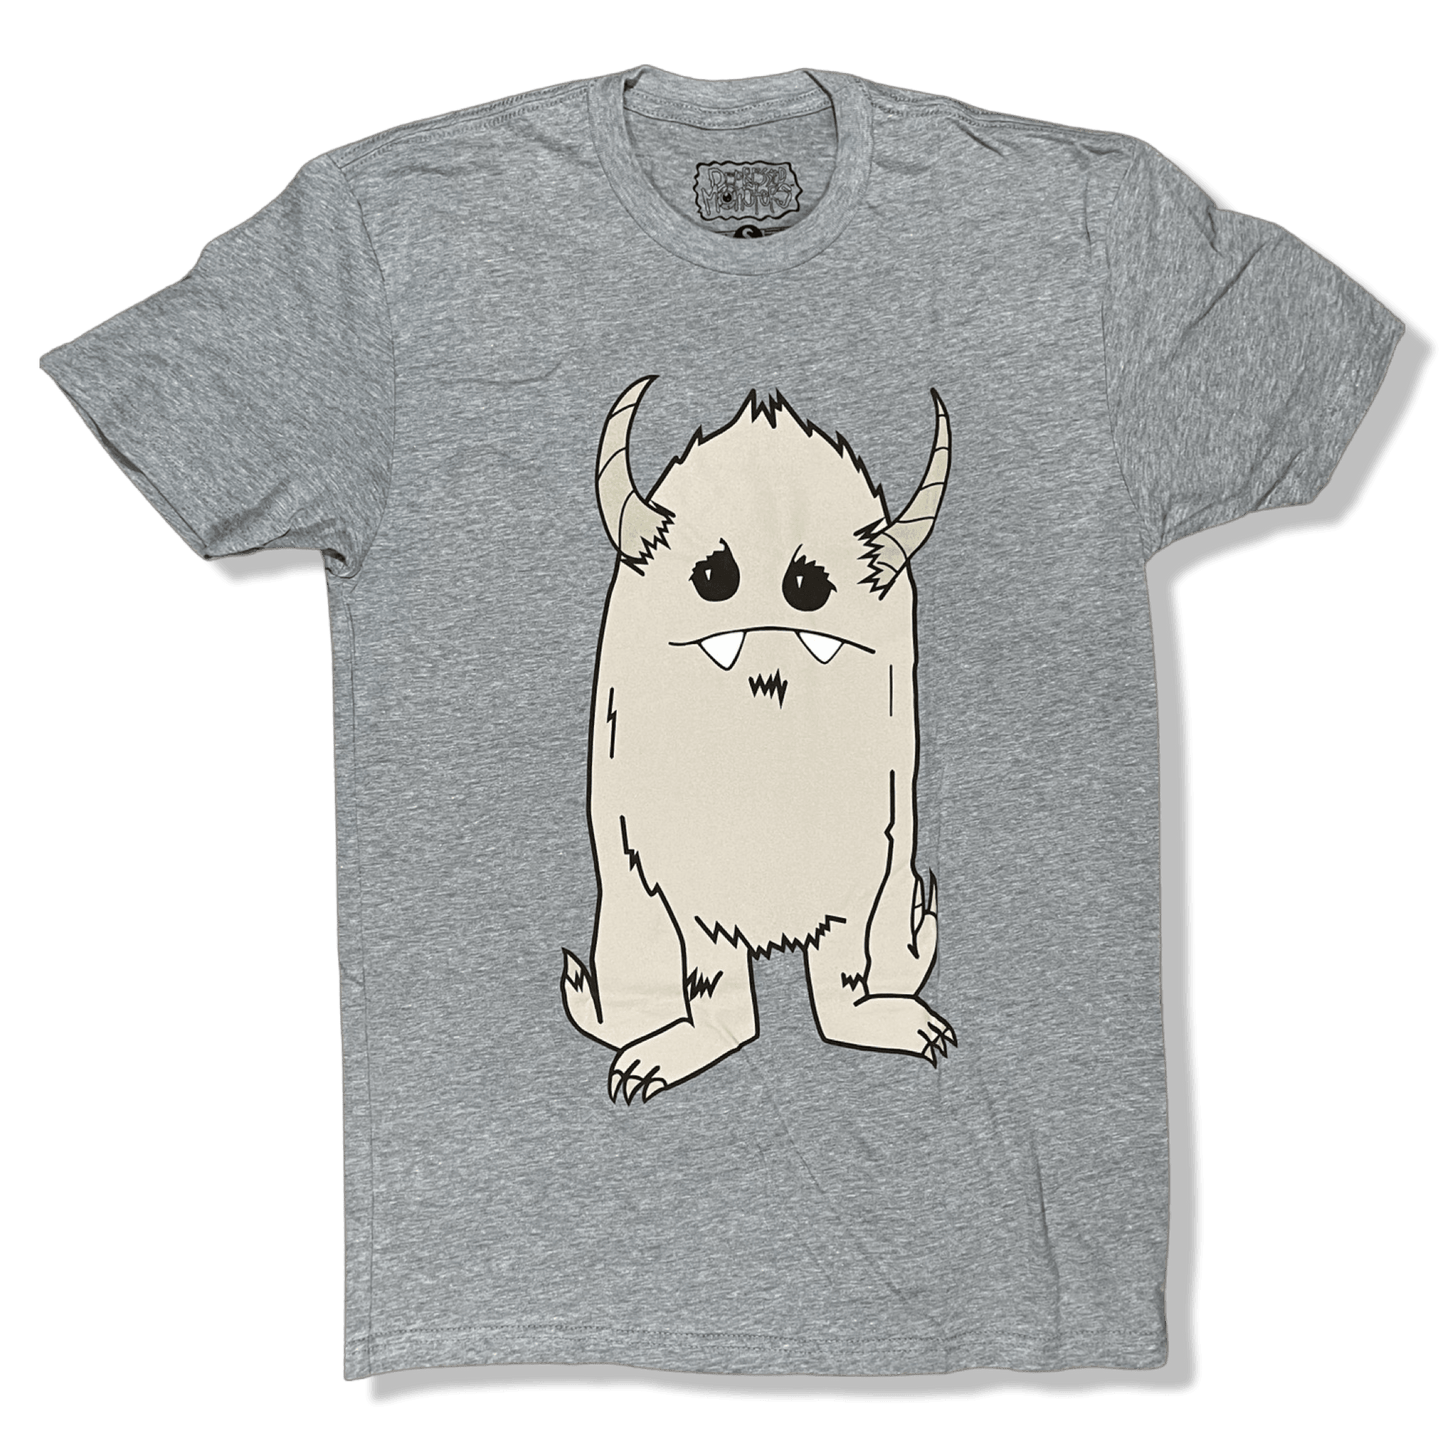 Yerman Shirt - Depressed Monsters